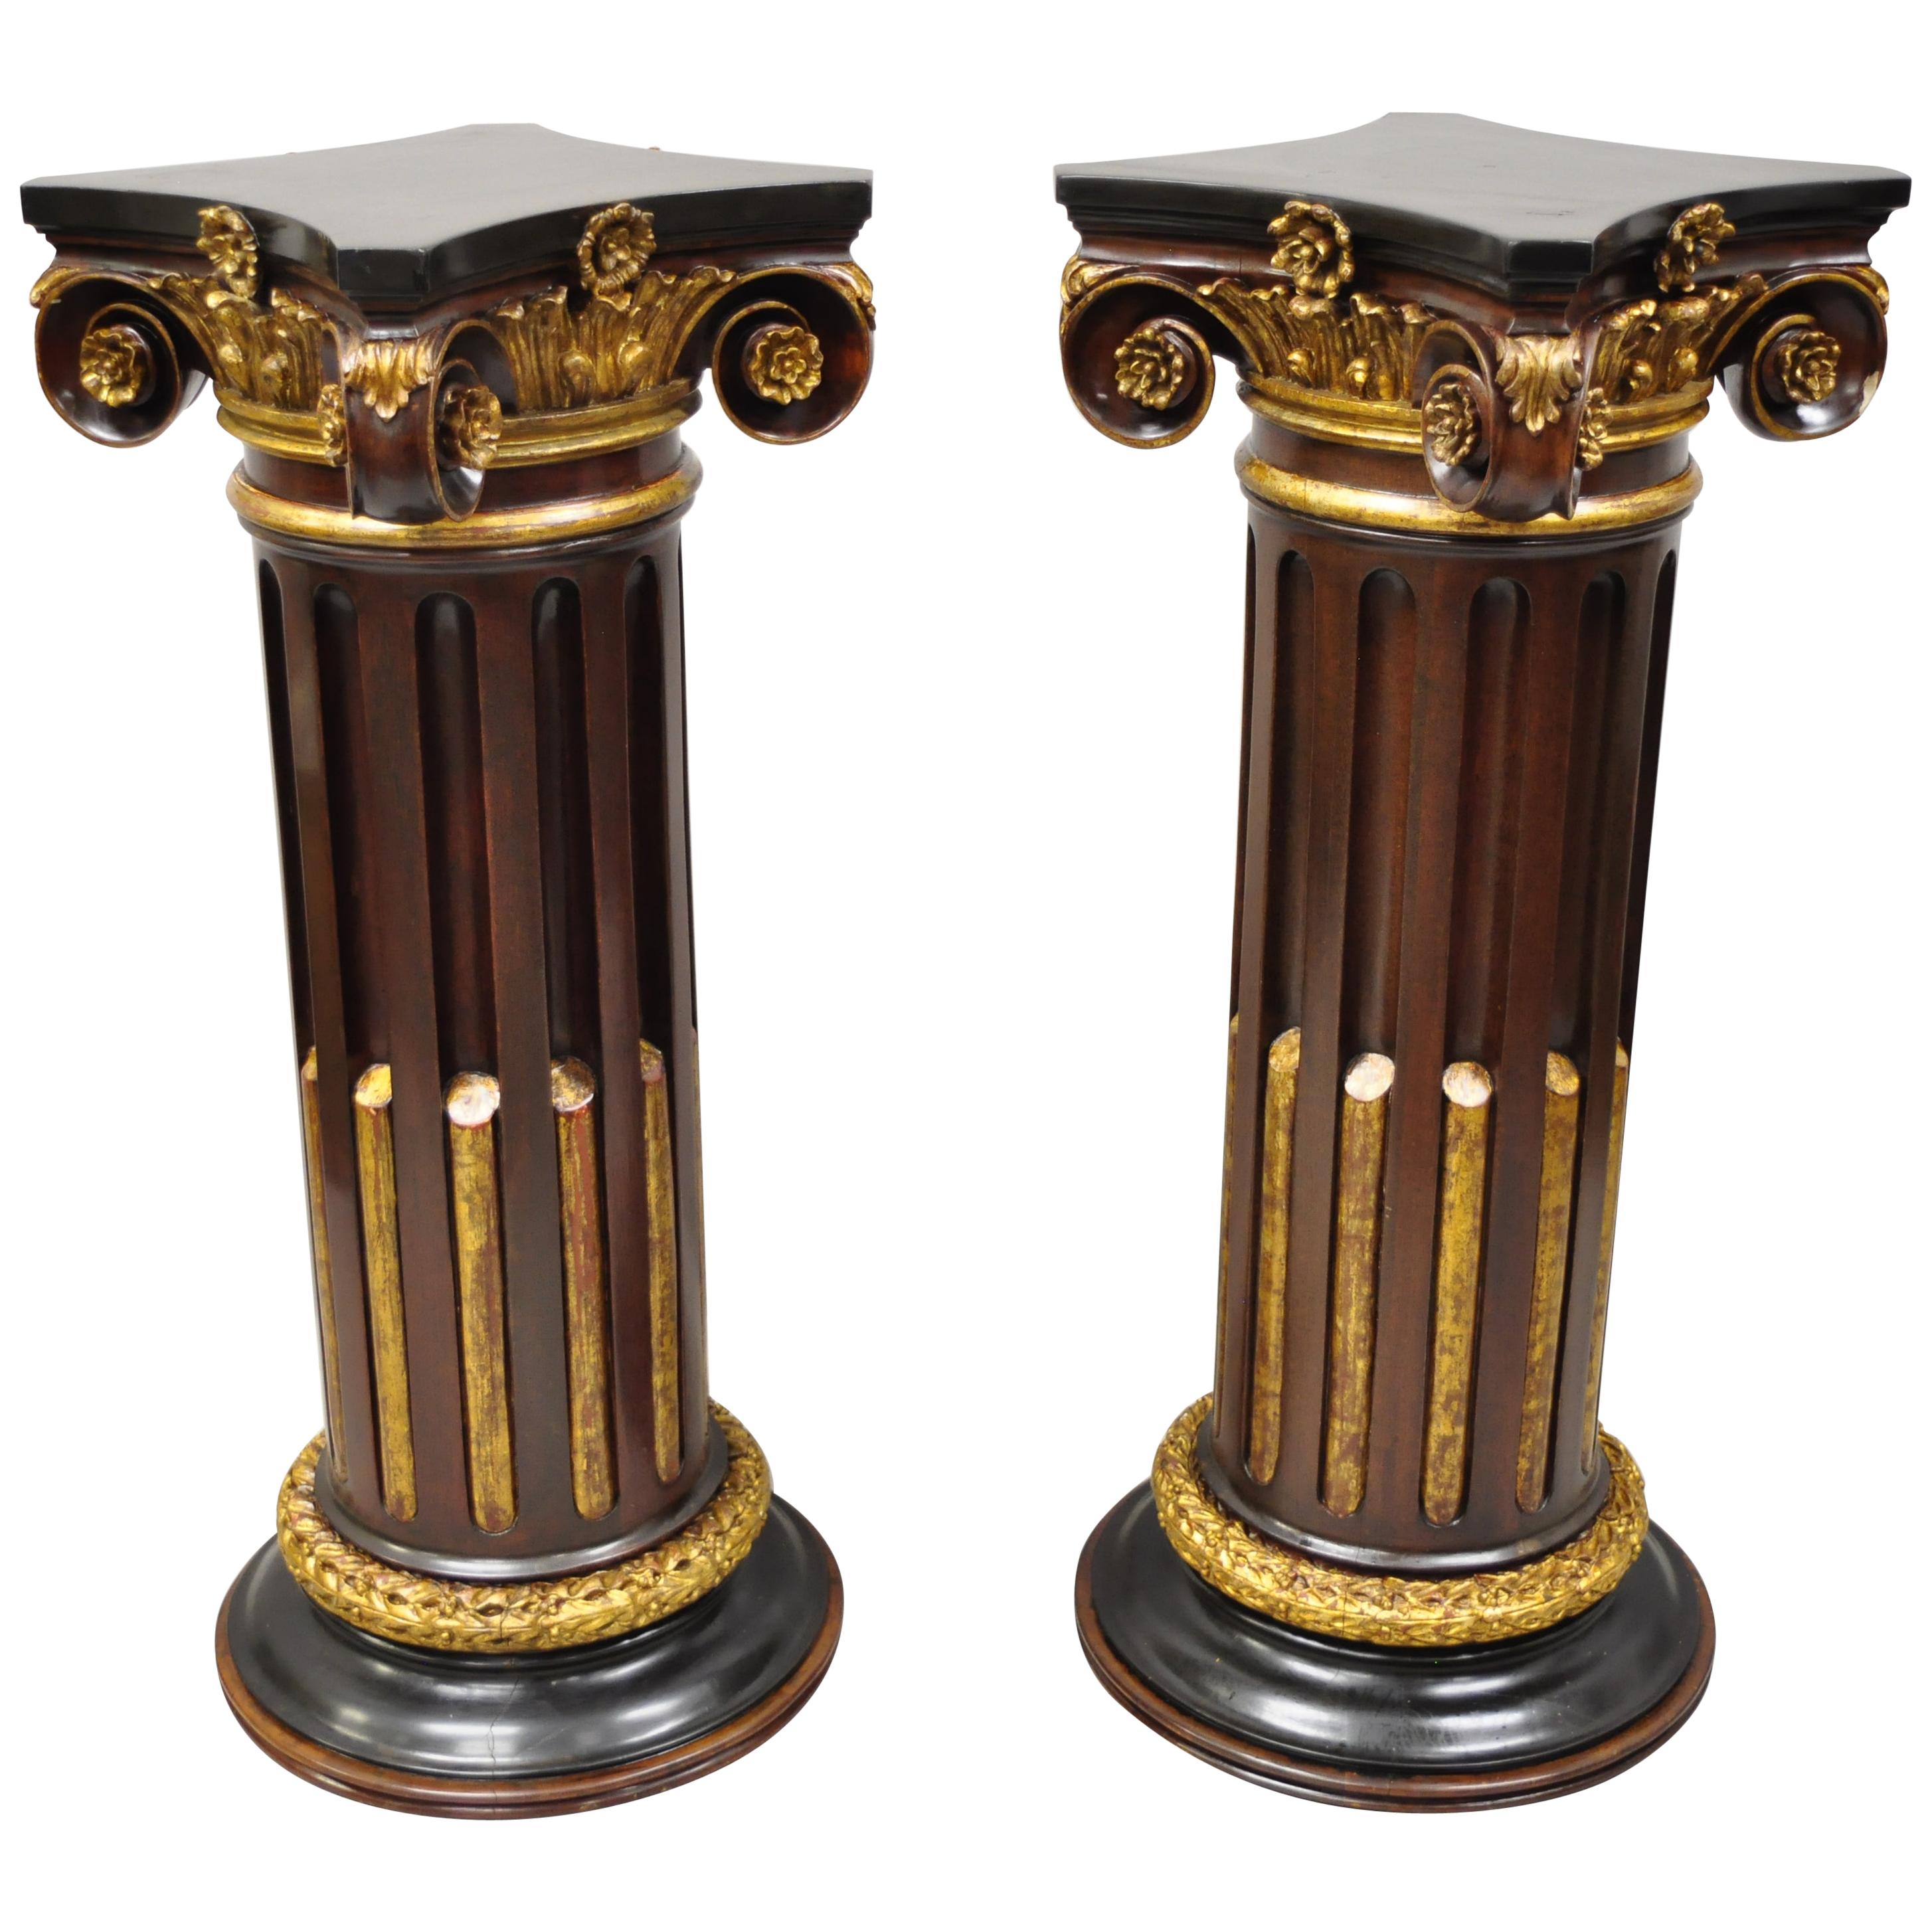 Italian Classical Carved Polychrome Gold Gilt Corinthian Column Pedestals, Pair For Sale